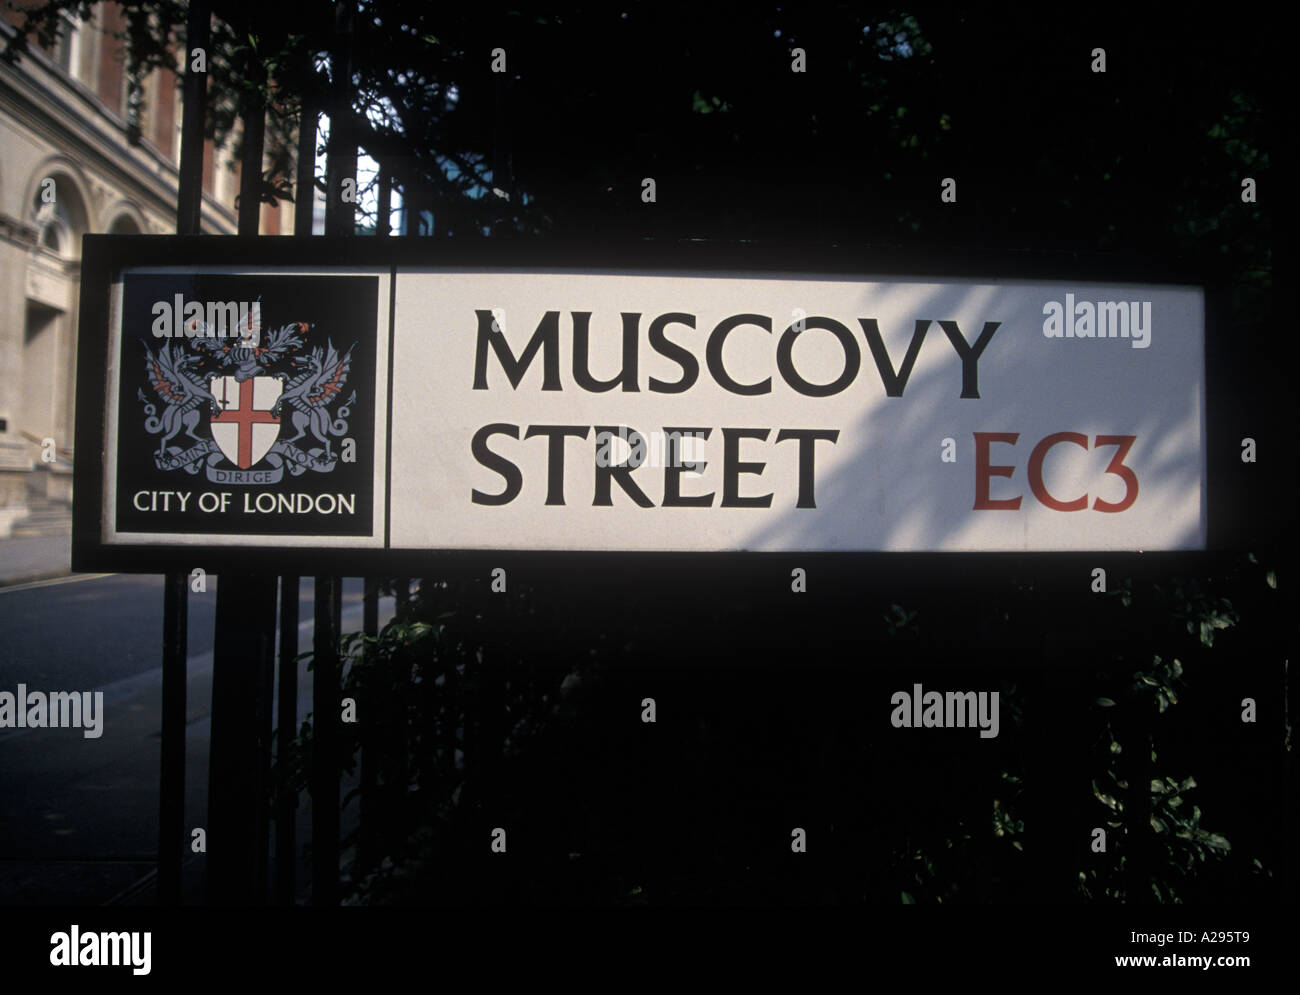 Muscovy Street City of London England UK Europe Stock Photo